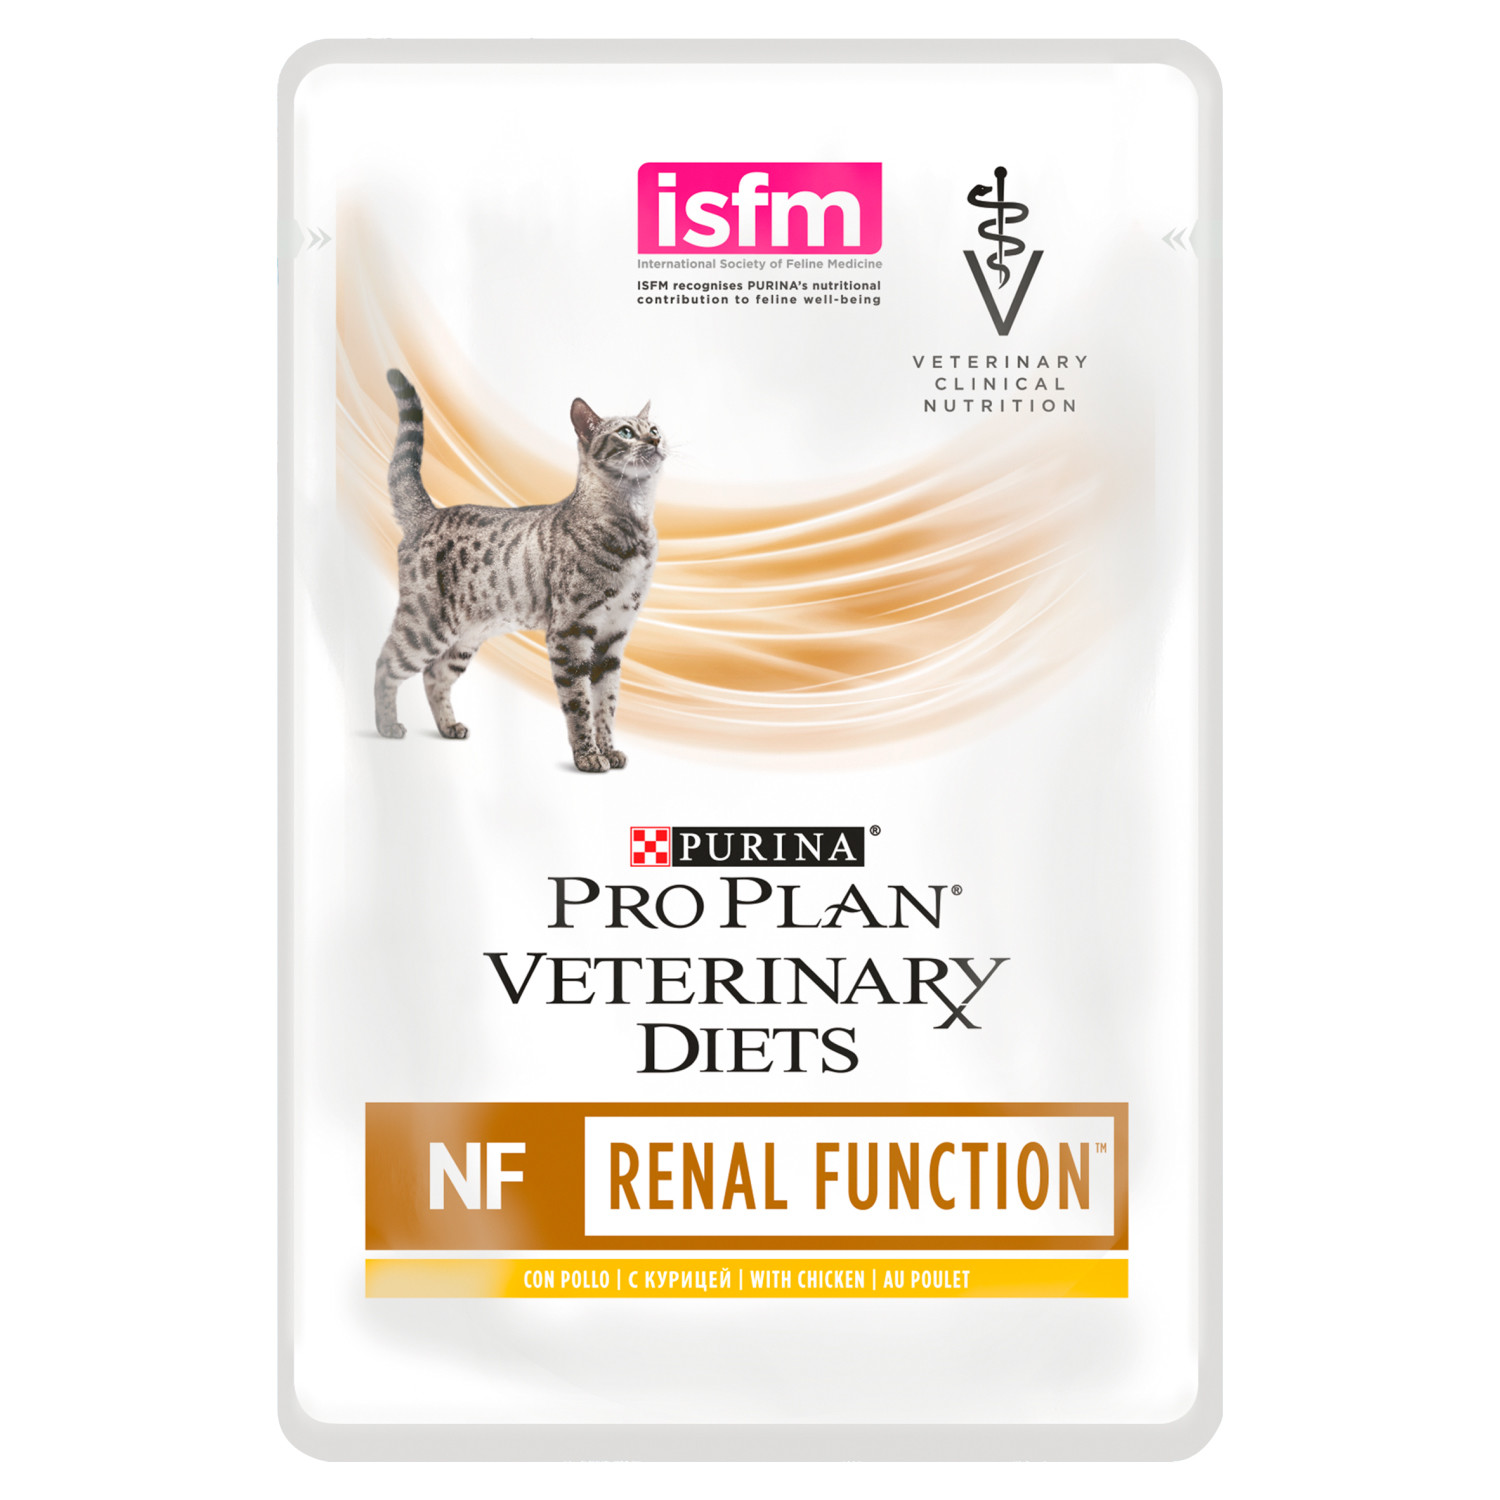 Purina Senior Cat Food Veterinary Diets